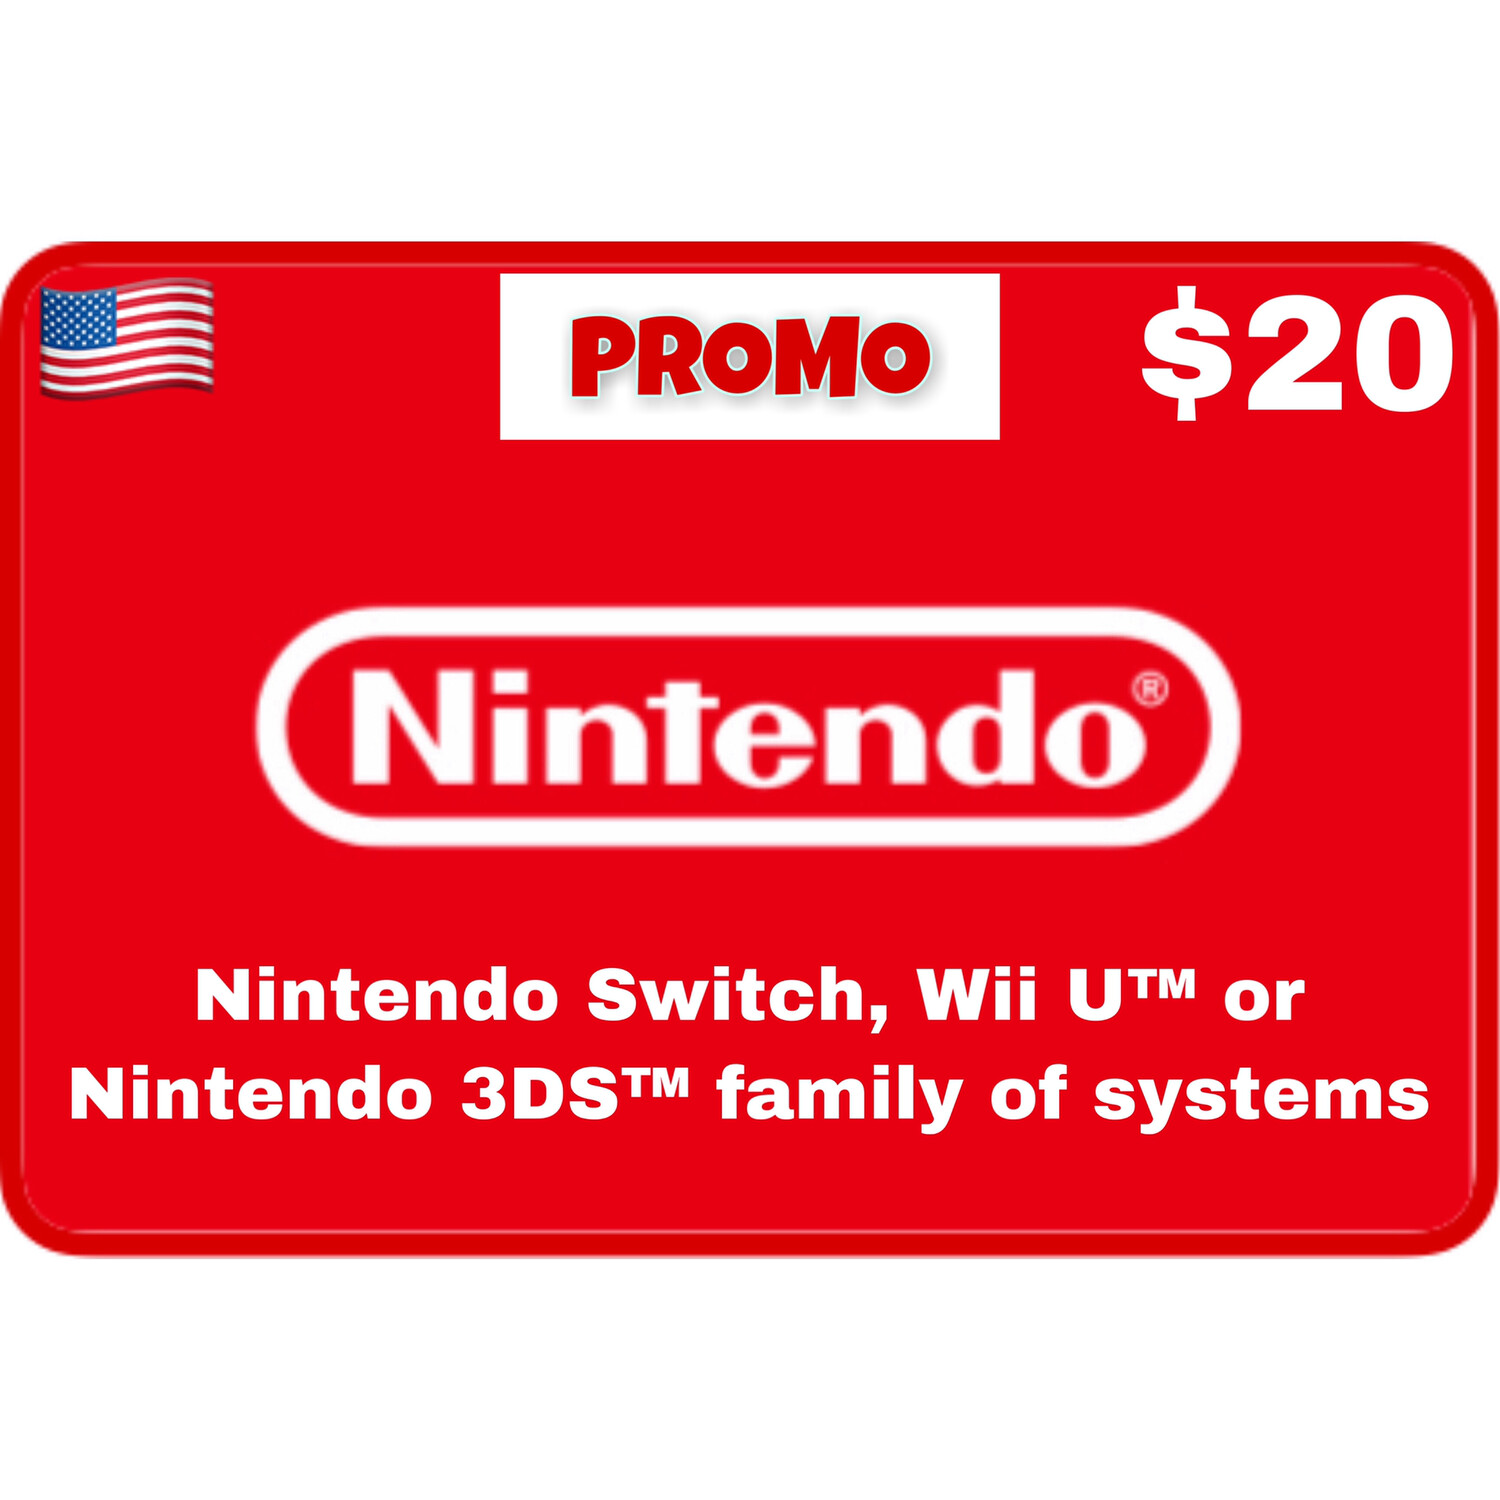 Promo Nintendo USA 20 (Web Order Only)